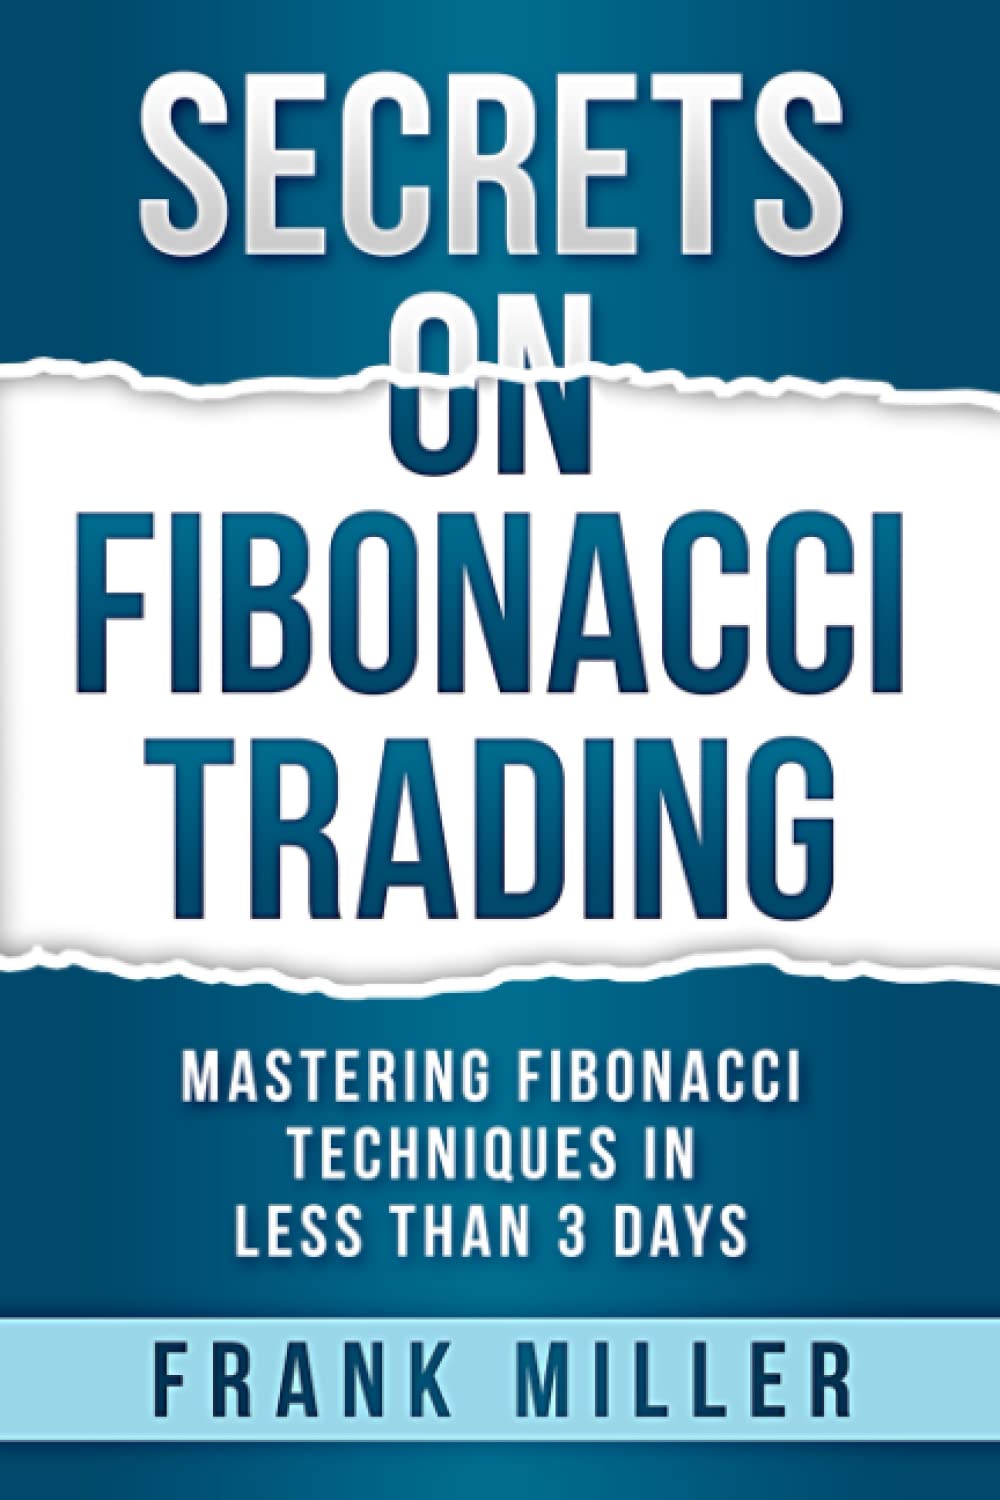 Secrets On Fibonacci Trading: Mastering Fibonacci Techniques In Less Than 3 Days, by Frank Miller